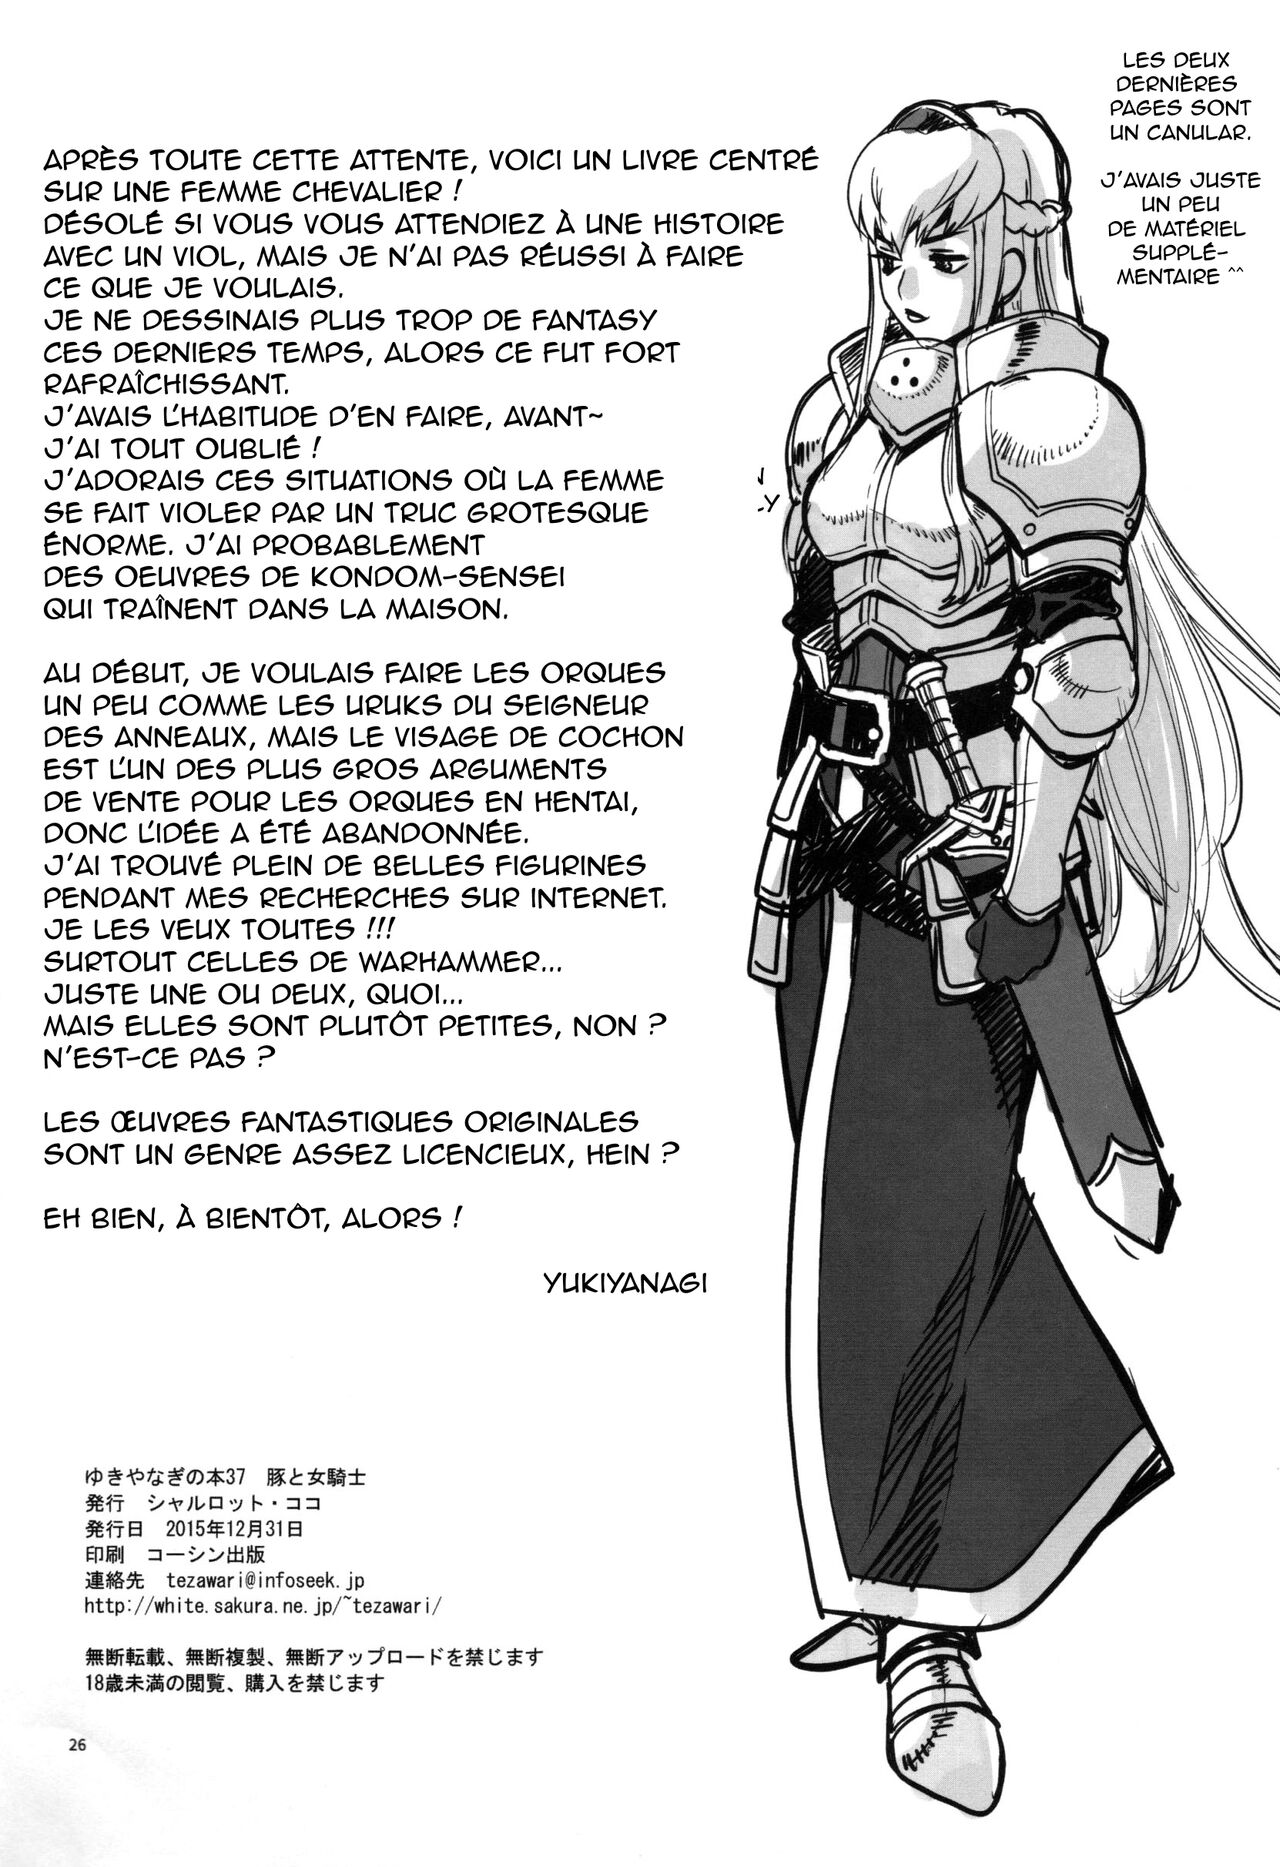 Yukiyanagi no Hon 37 Buta to Onnakishi - Lady knight in love with Orc numero d'image 24